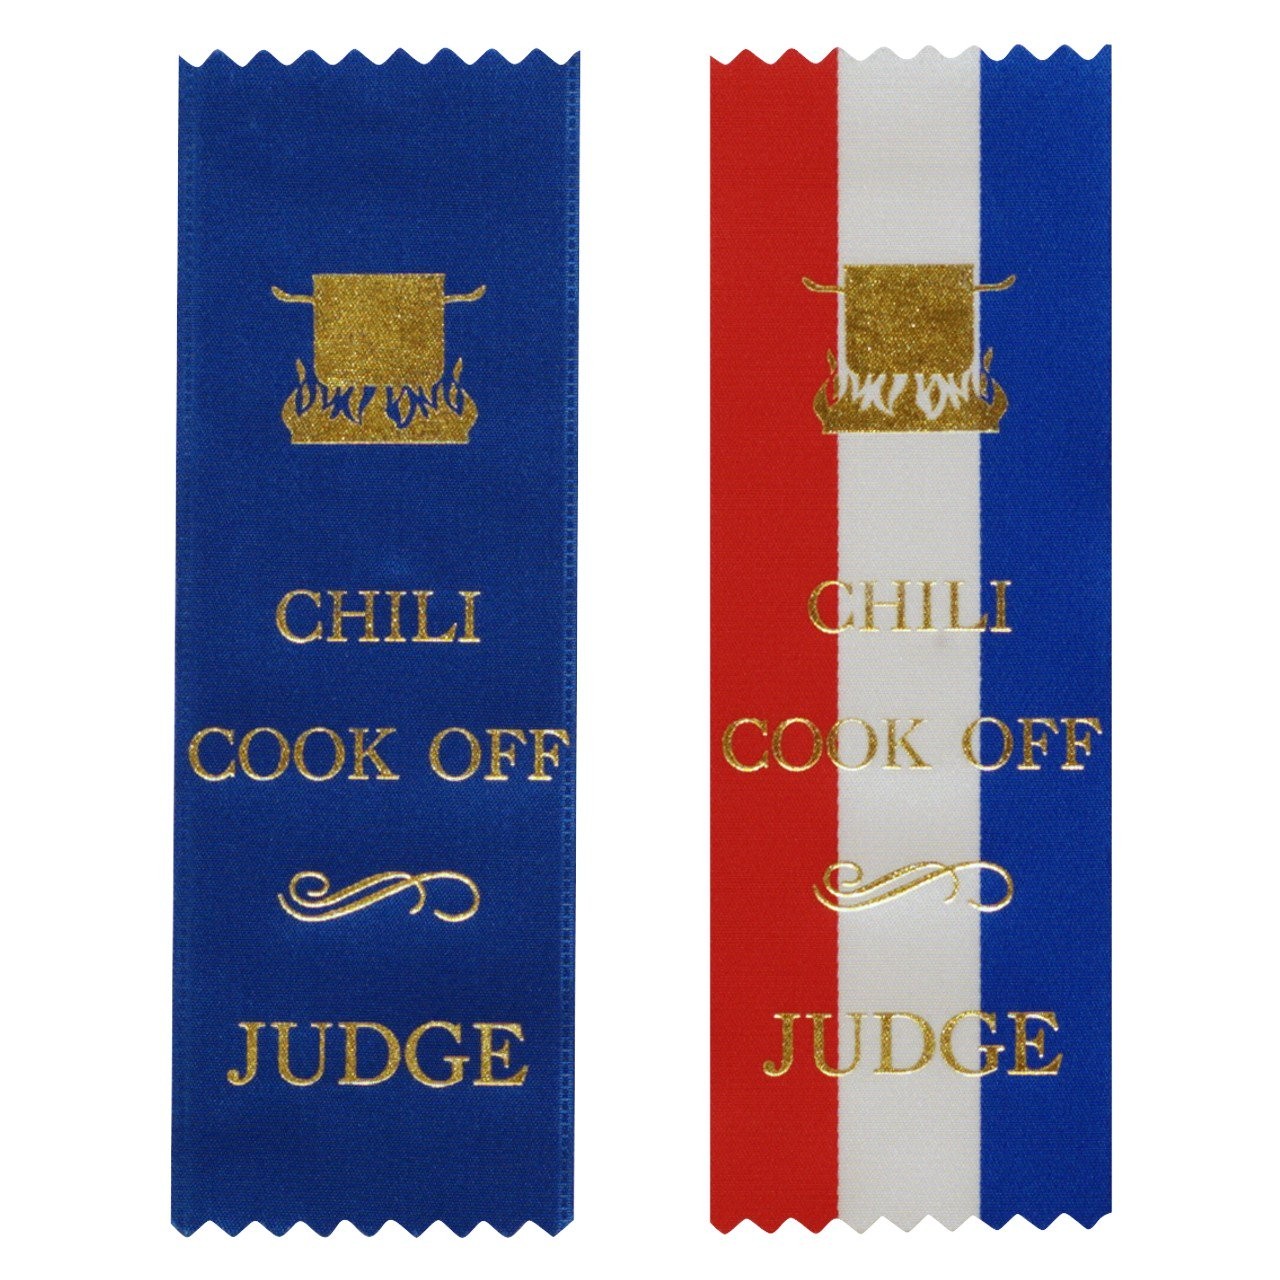 Chili Cook Off Judge Ribbons Award Ideas